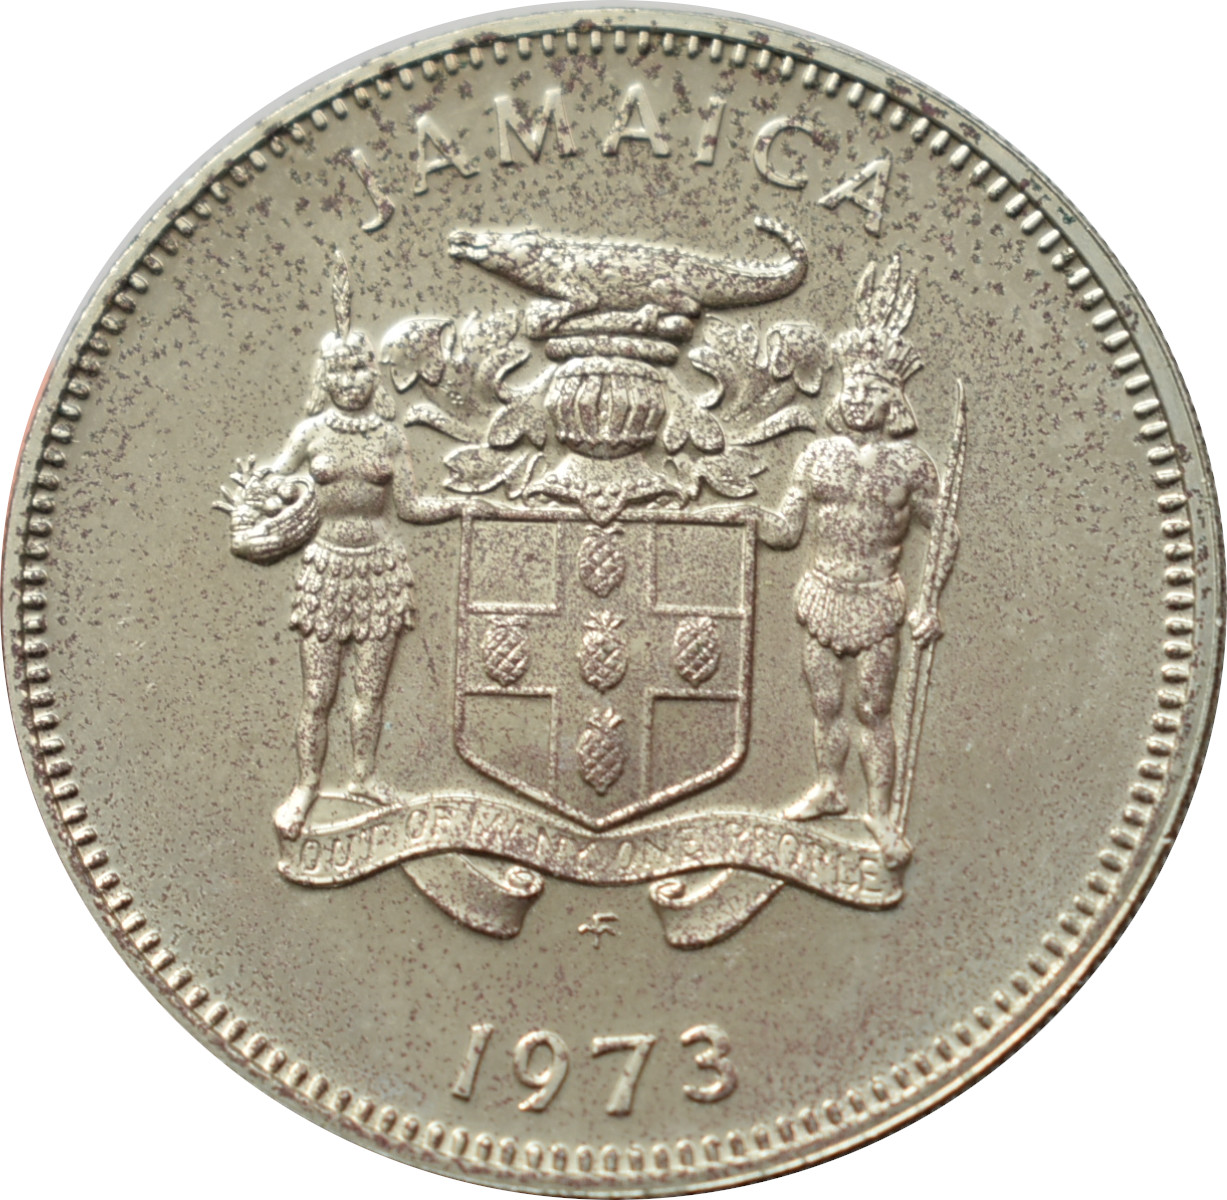 Jamajka 20 Cents 1973